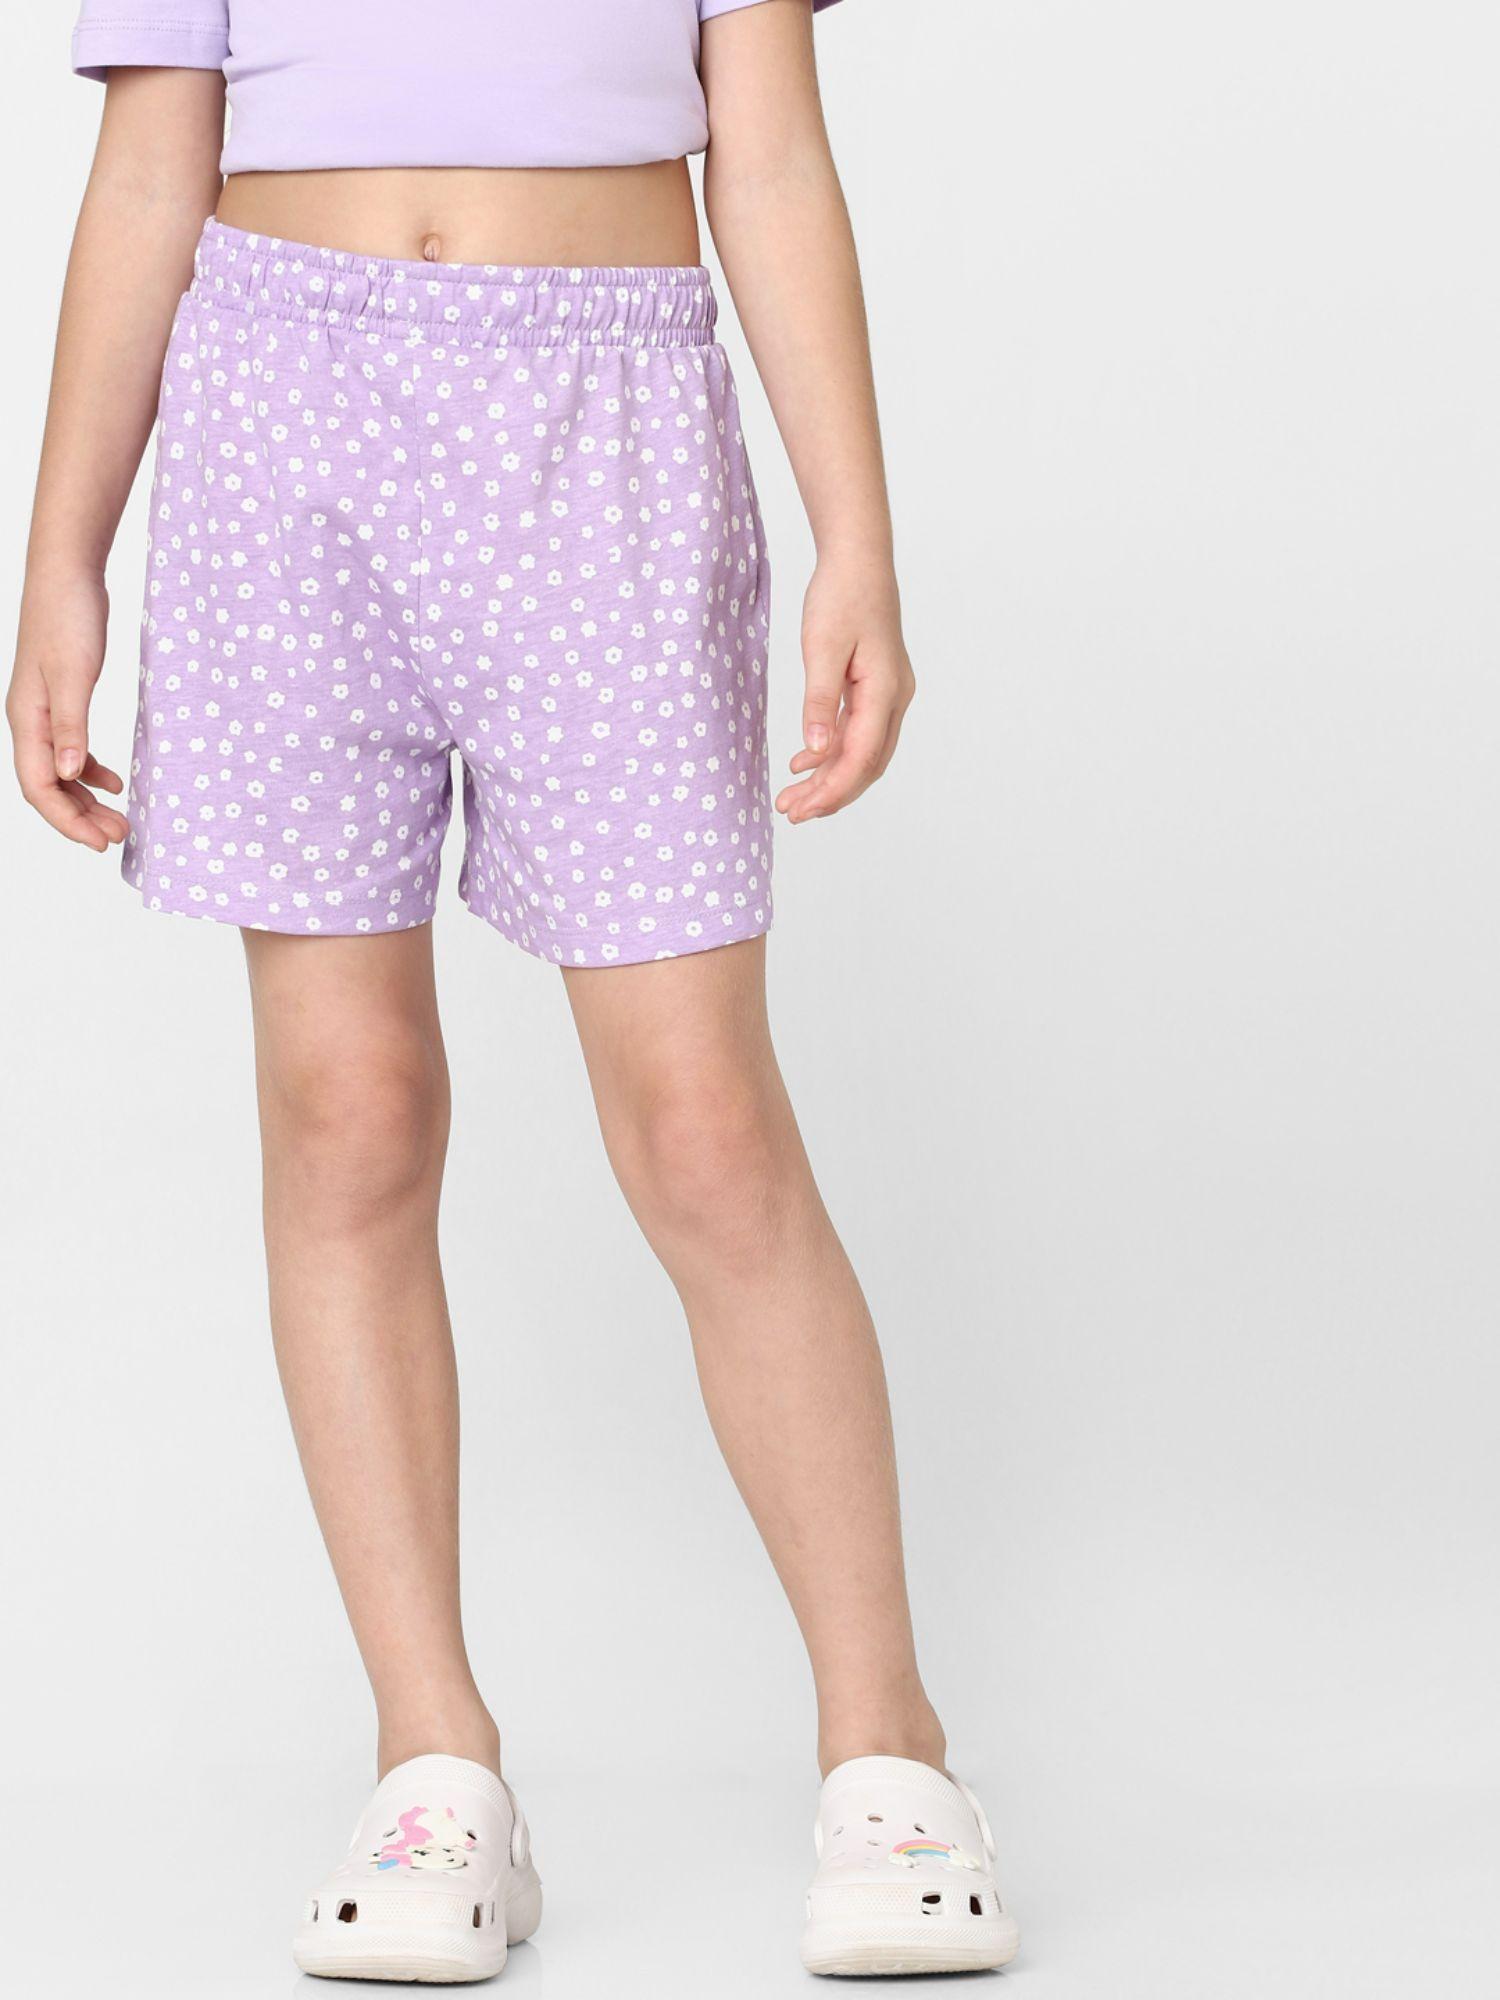 girls-printed-purple-shorts